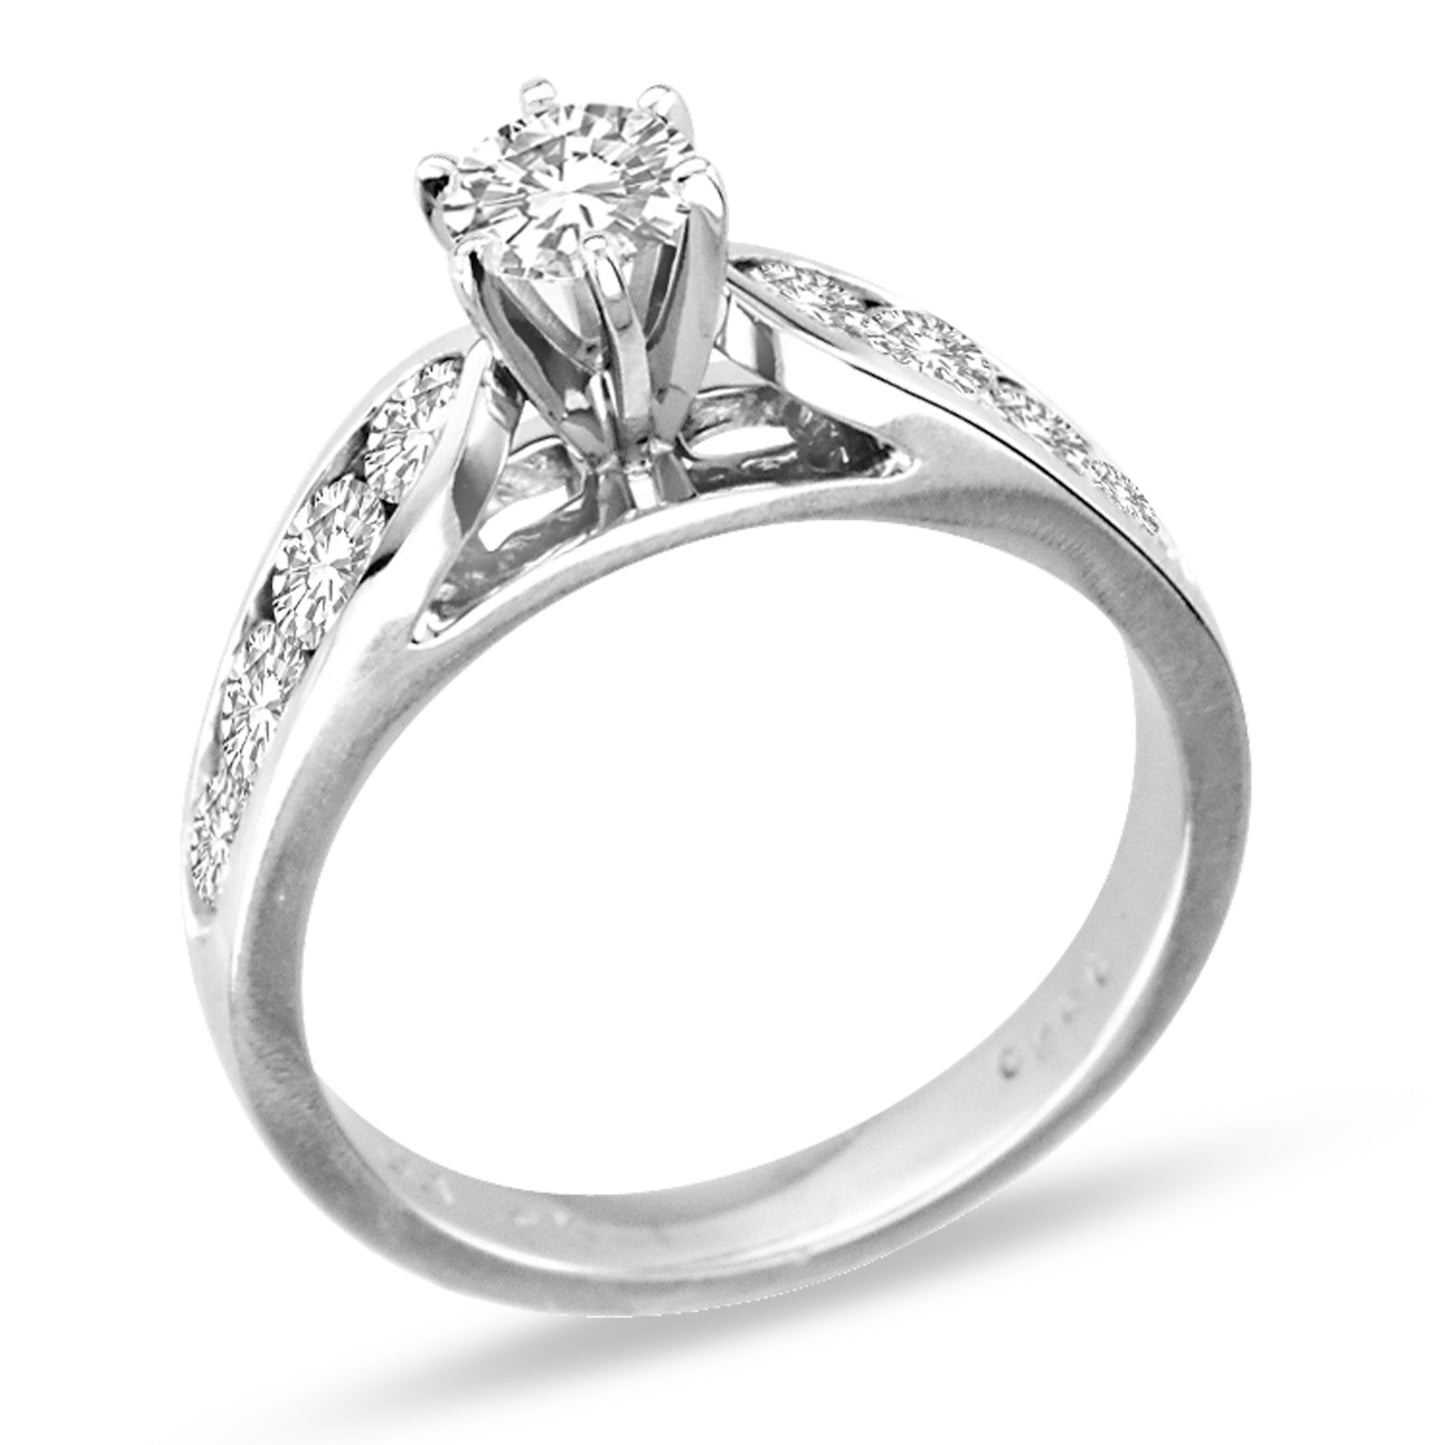 1 1/4ct Diamond Engagement Ring in 14k White Gold